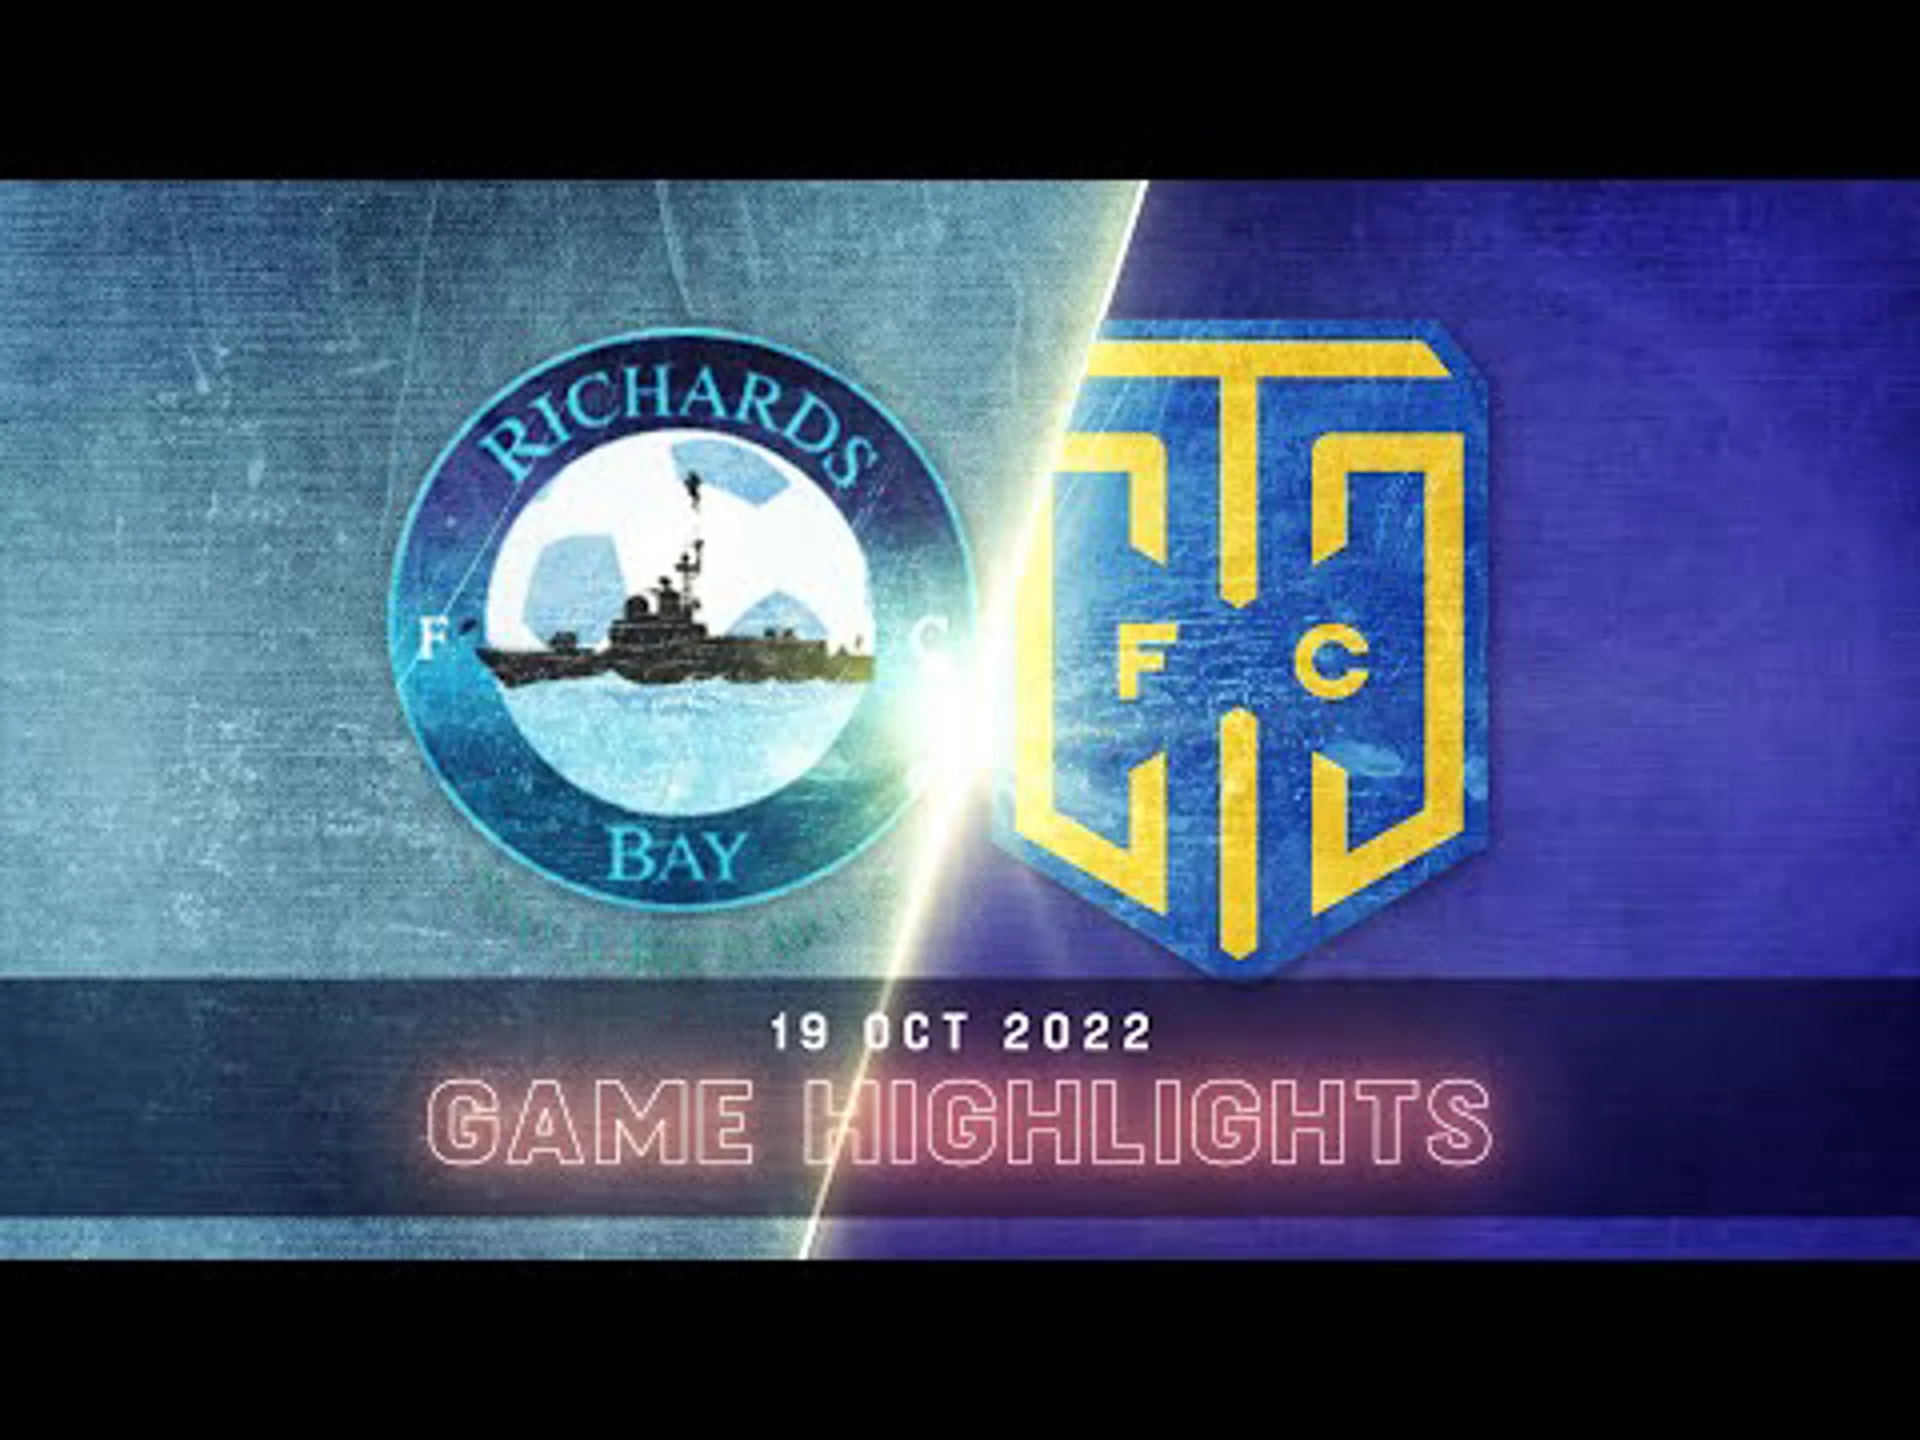 DStv Premiership | Richards Bay vs. Cape Town City | Highlights